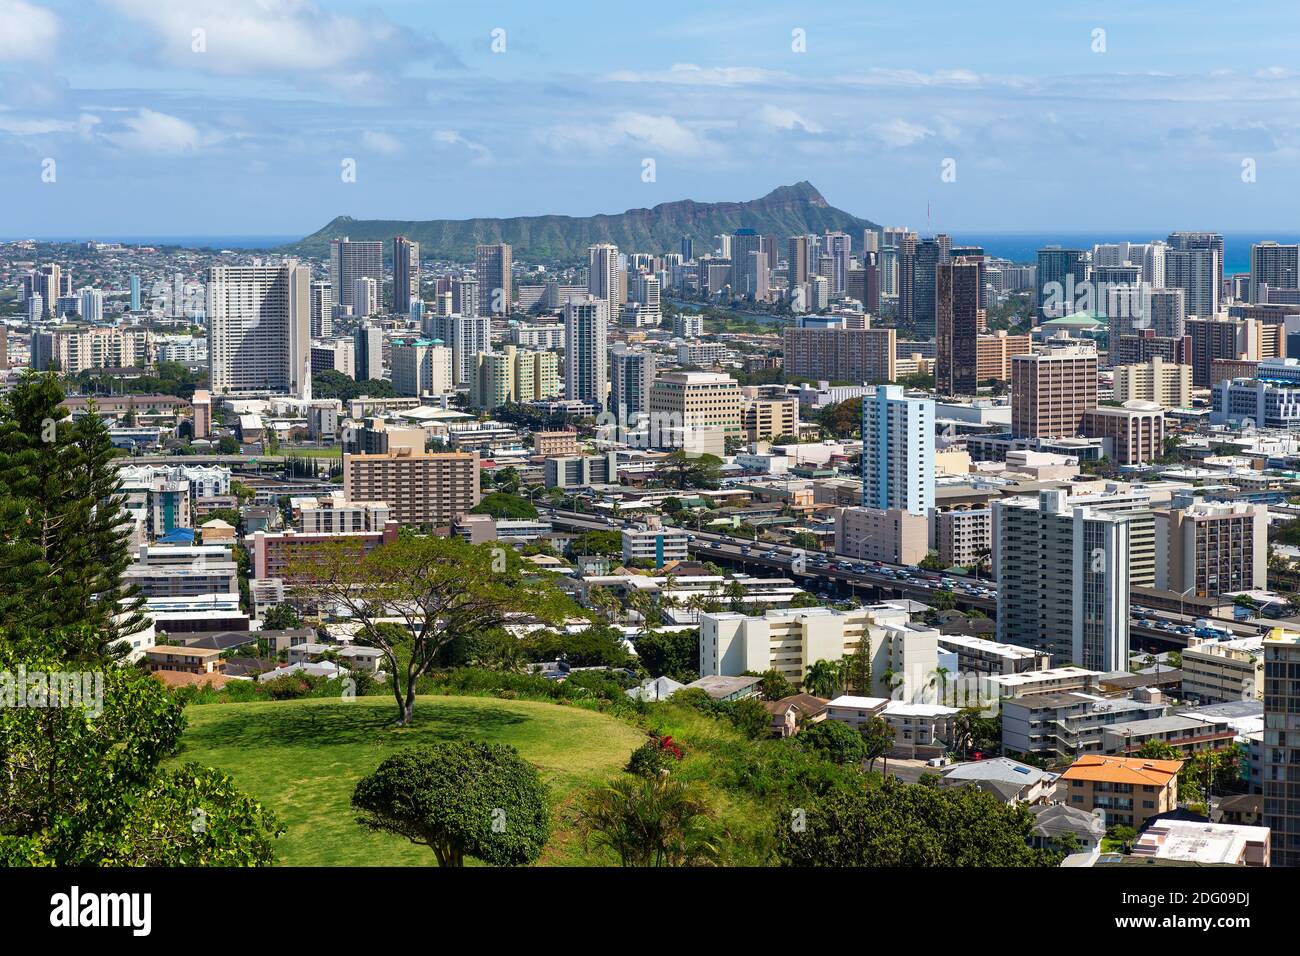 Honolulu, Waikiki and Diamond Head Crater, Oahu, Hawaii. High angle view from mountain lookout. Stock Photo